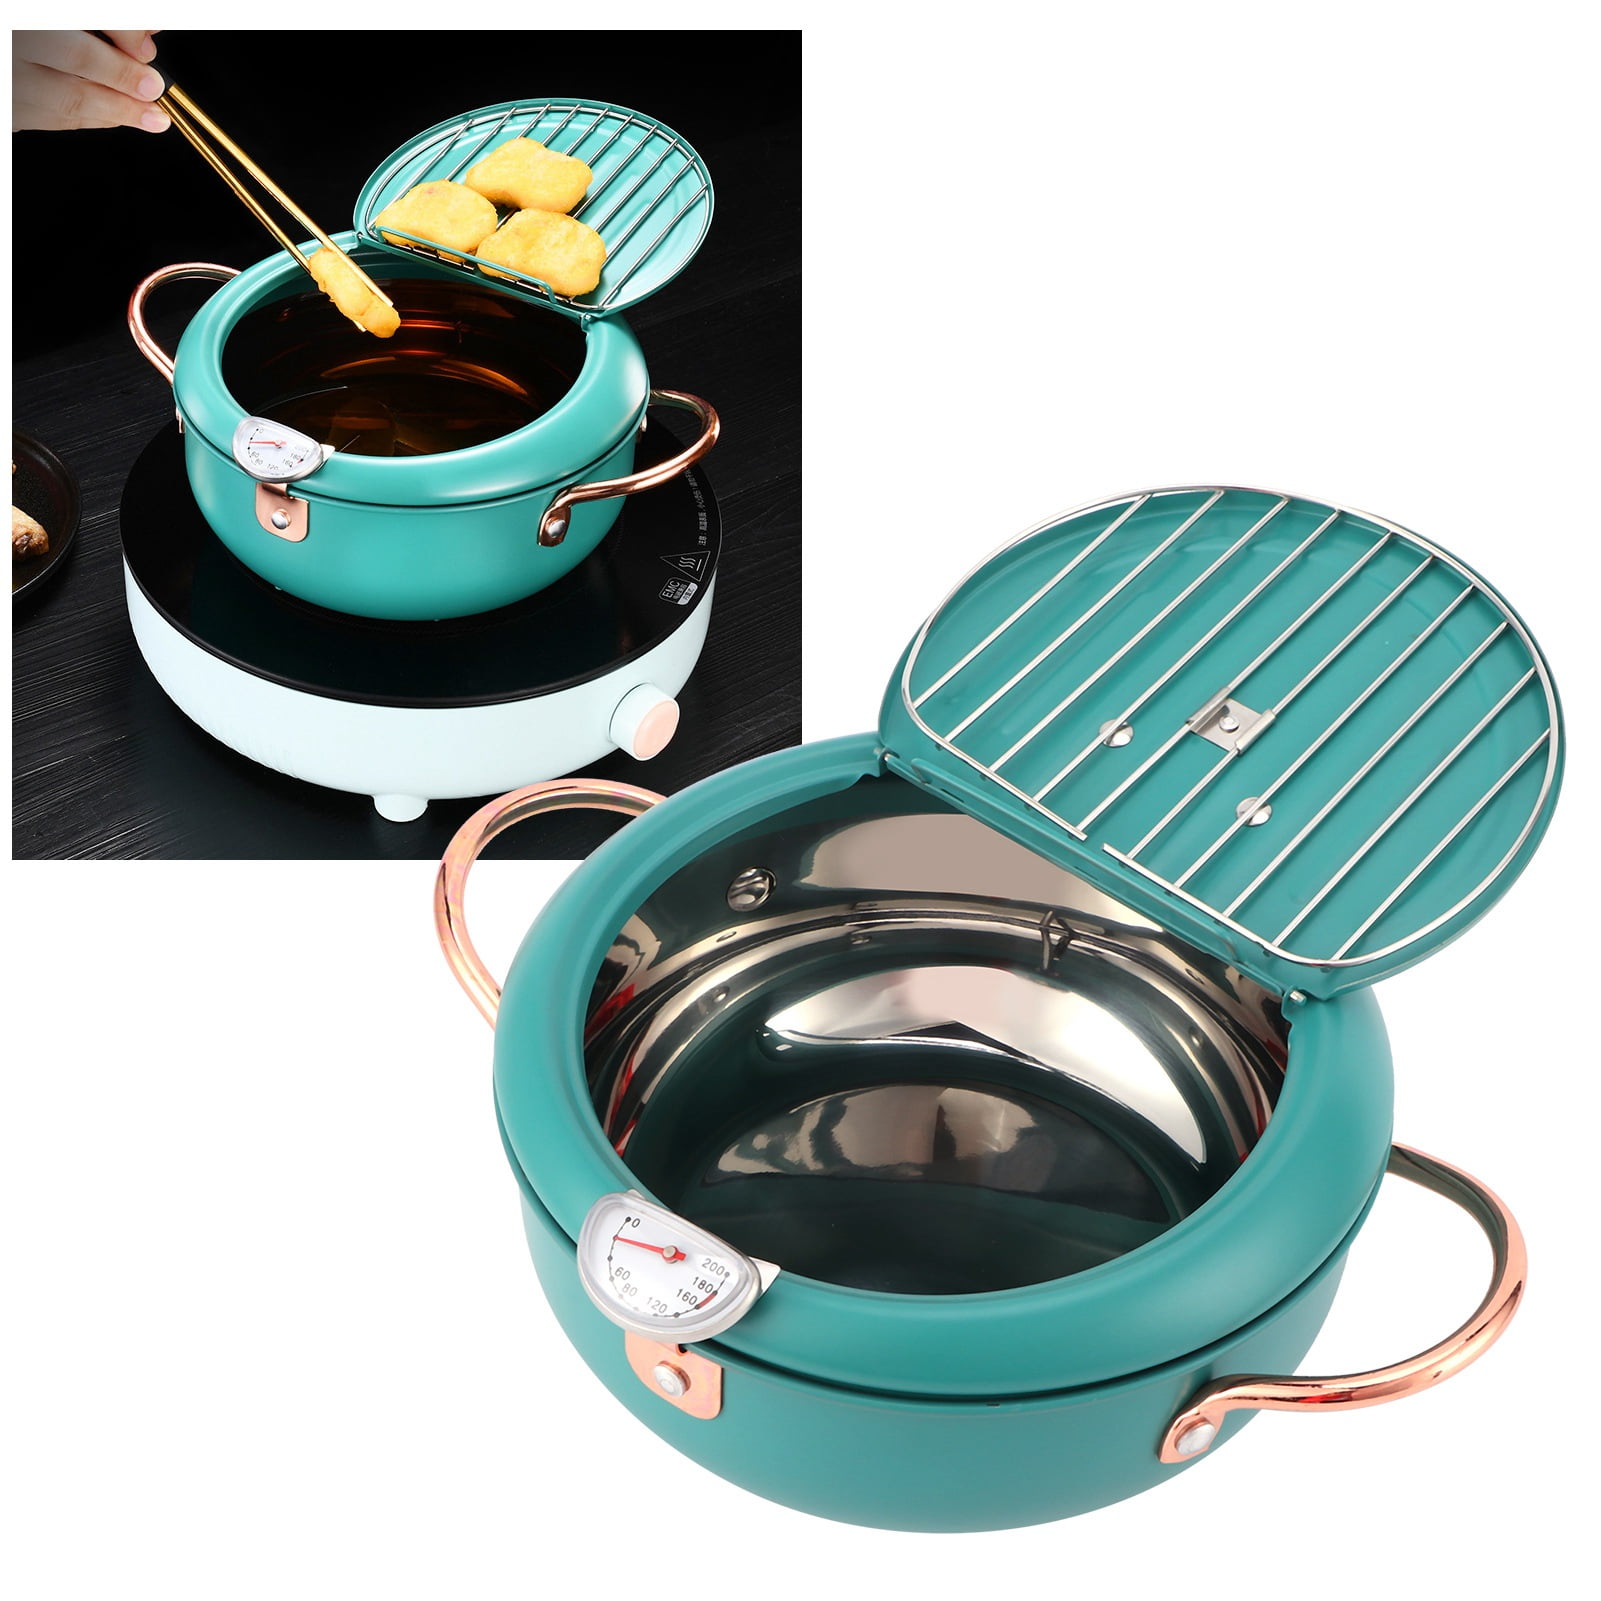 FELTECHELECTR Stainless Steel Mandarin Duck Pot Induction Frying